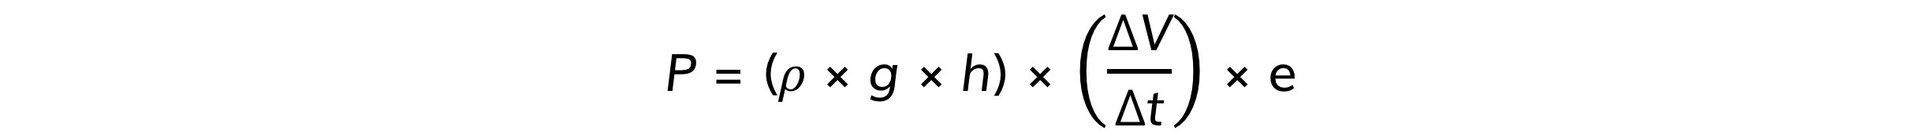 8.1.5-Equation-4